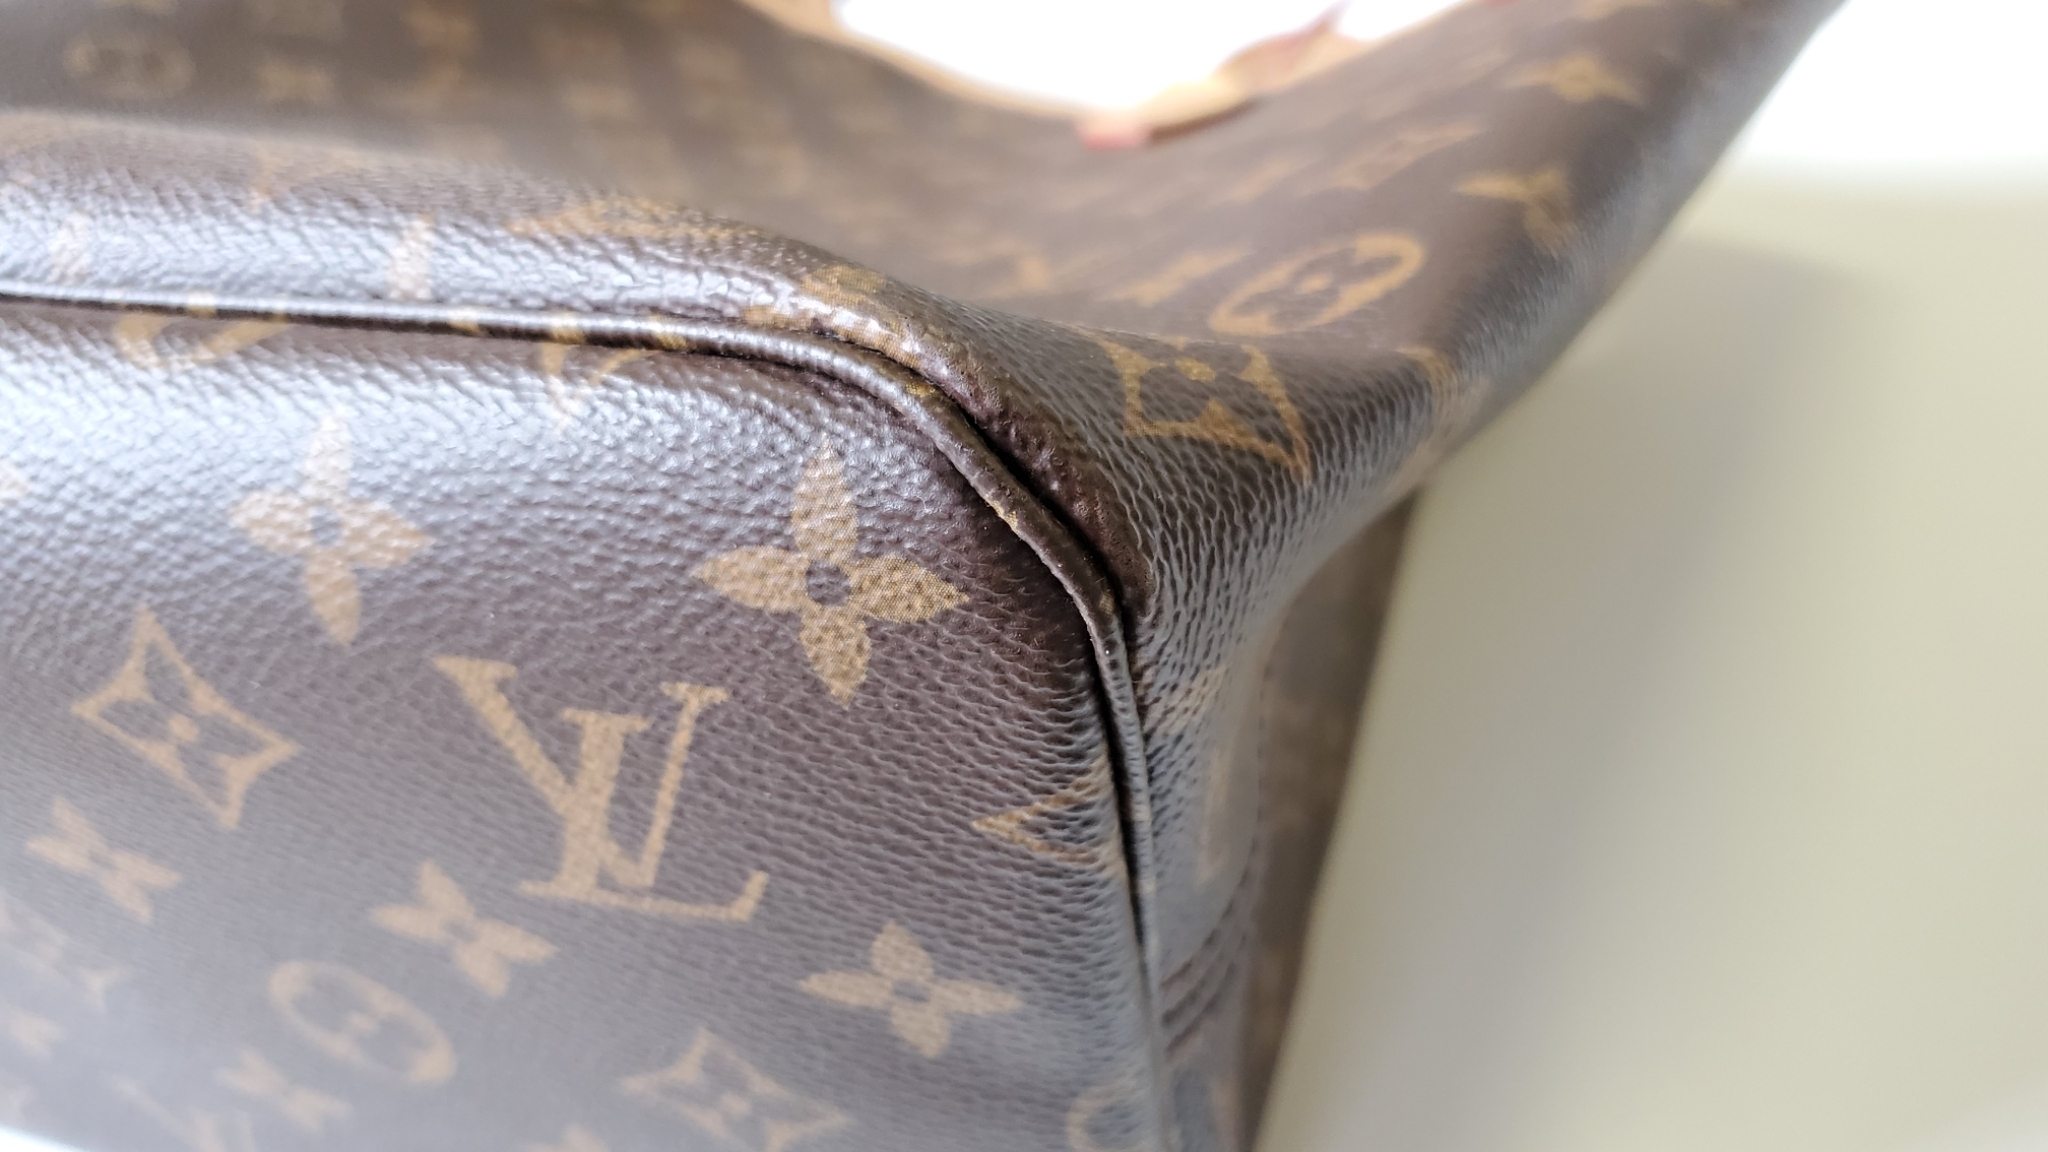 Louis Vuitton Monogram Neverfull MM Red – DAC